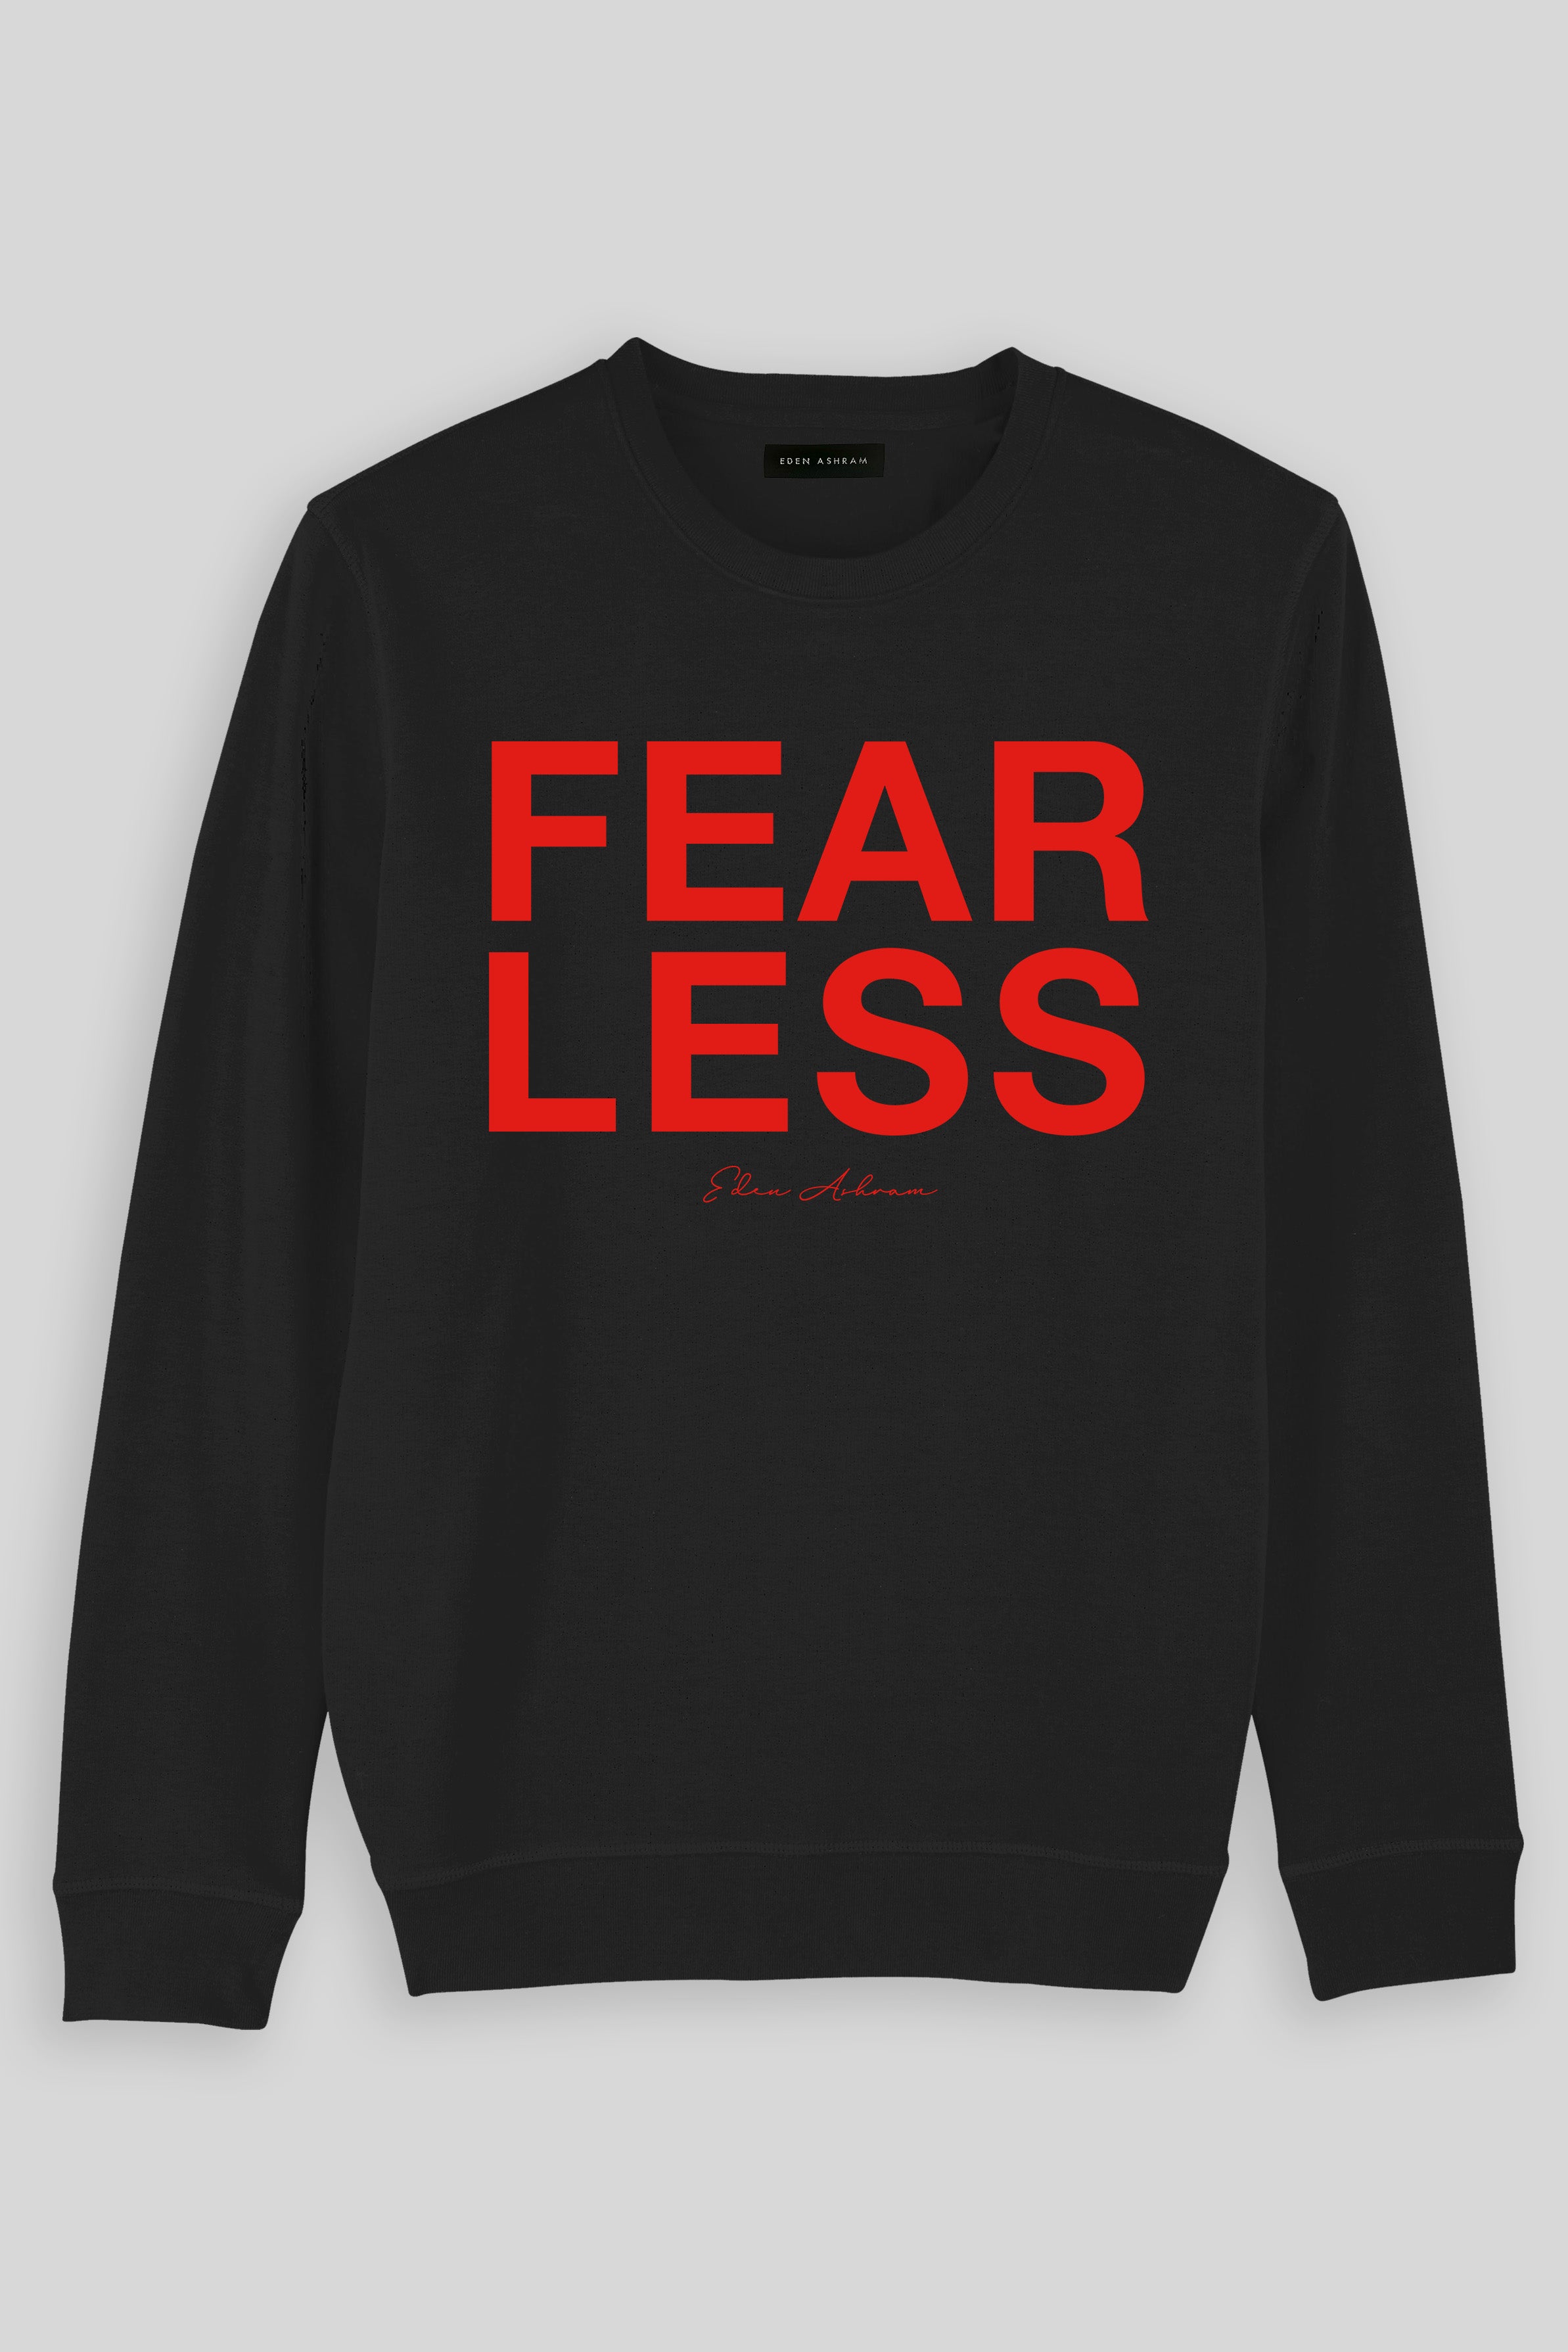 Eden Ashram Fear Less Premium Crew Neck Sweatshirt Black